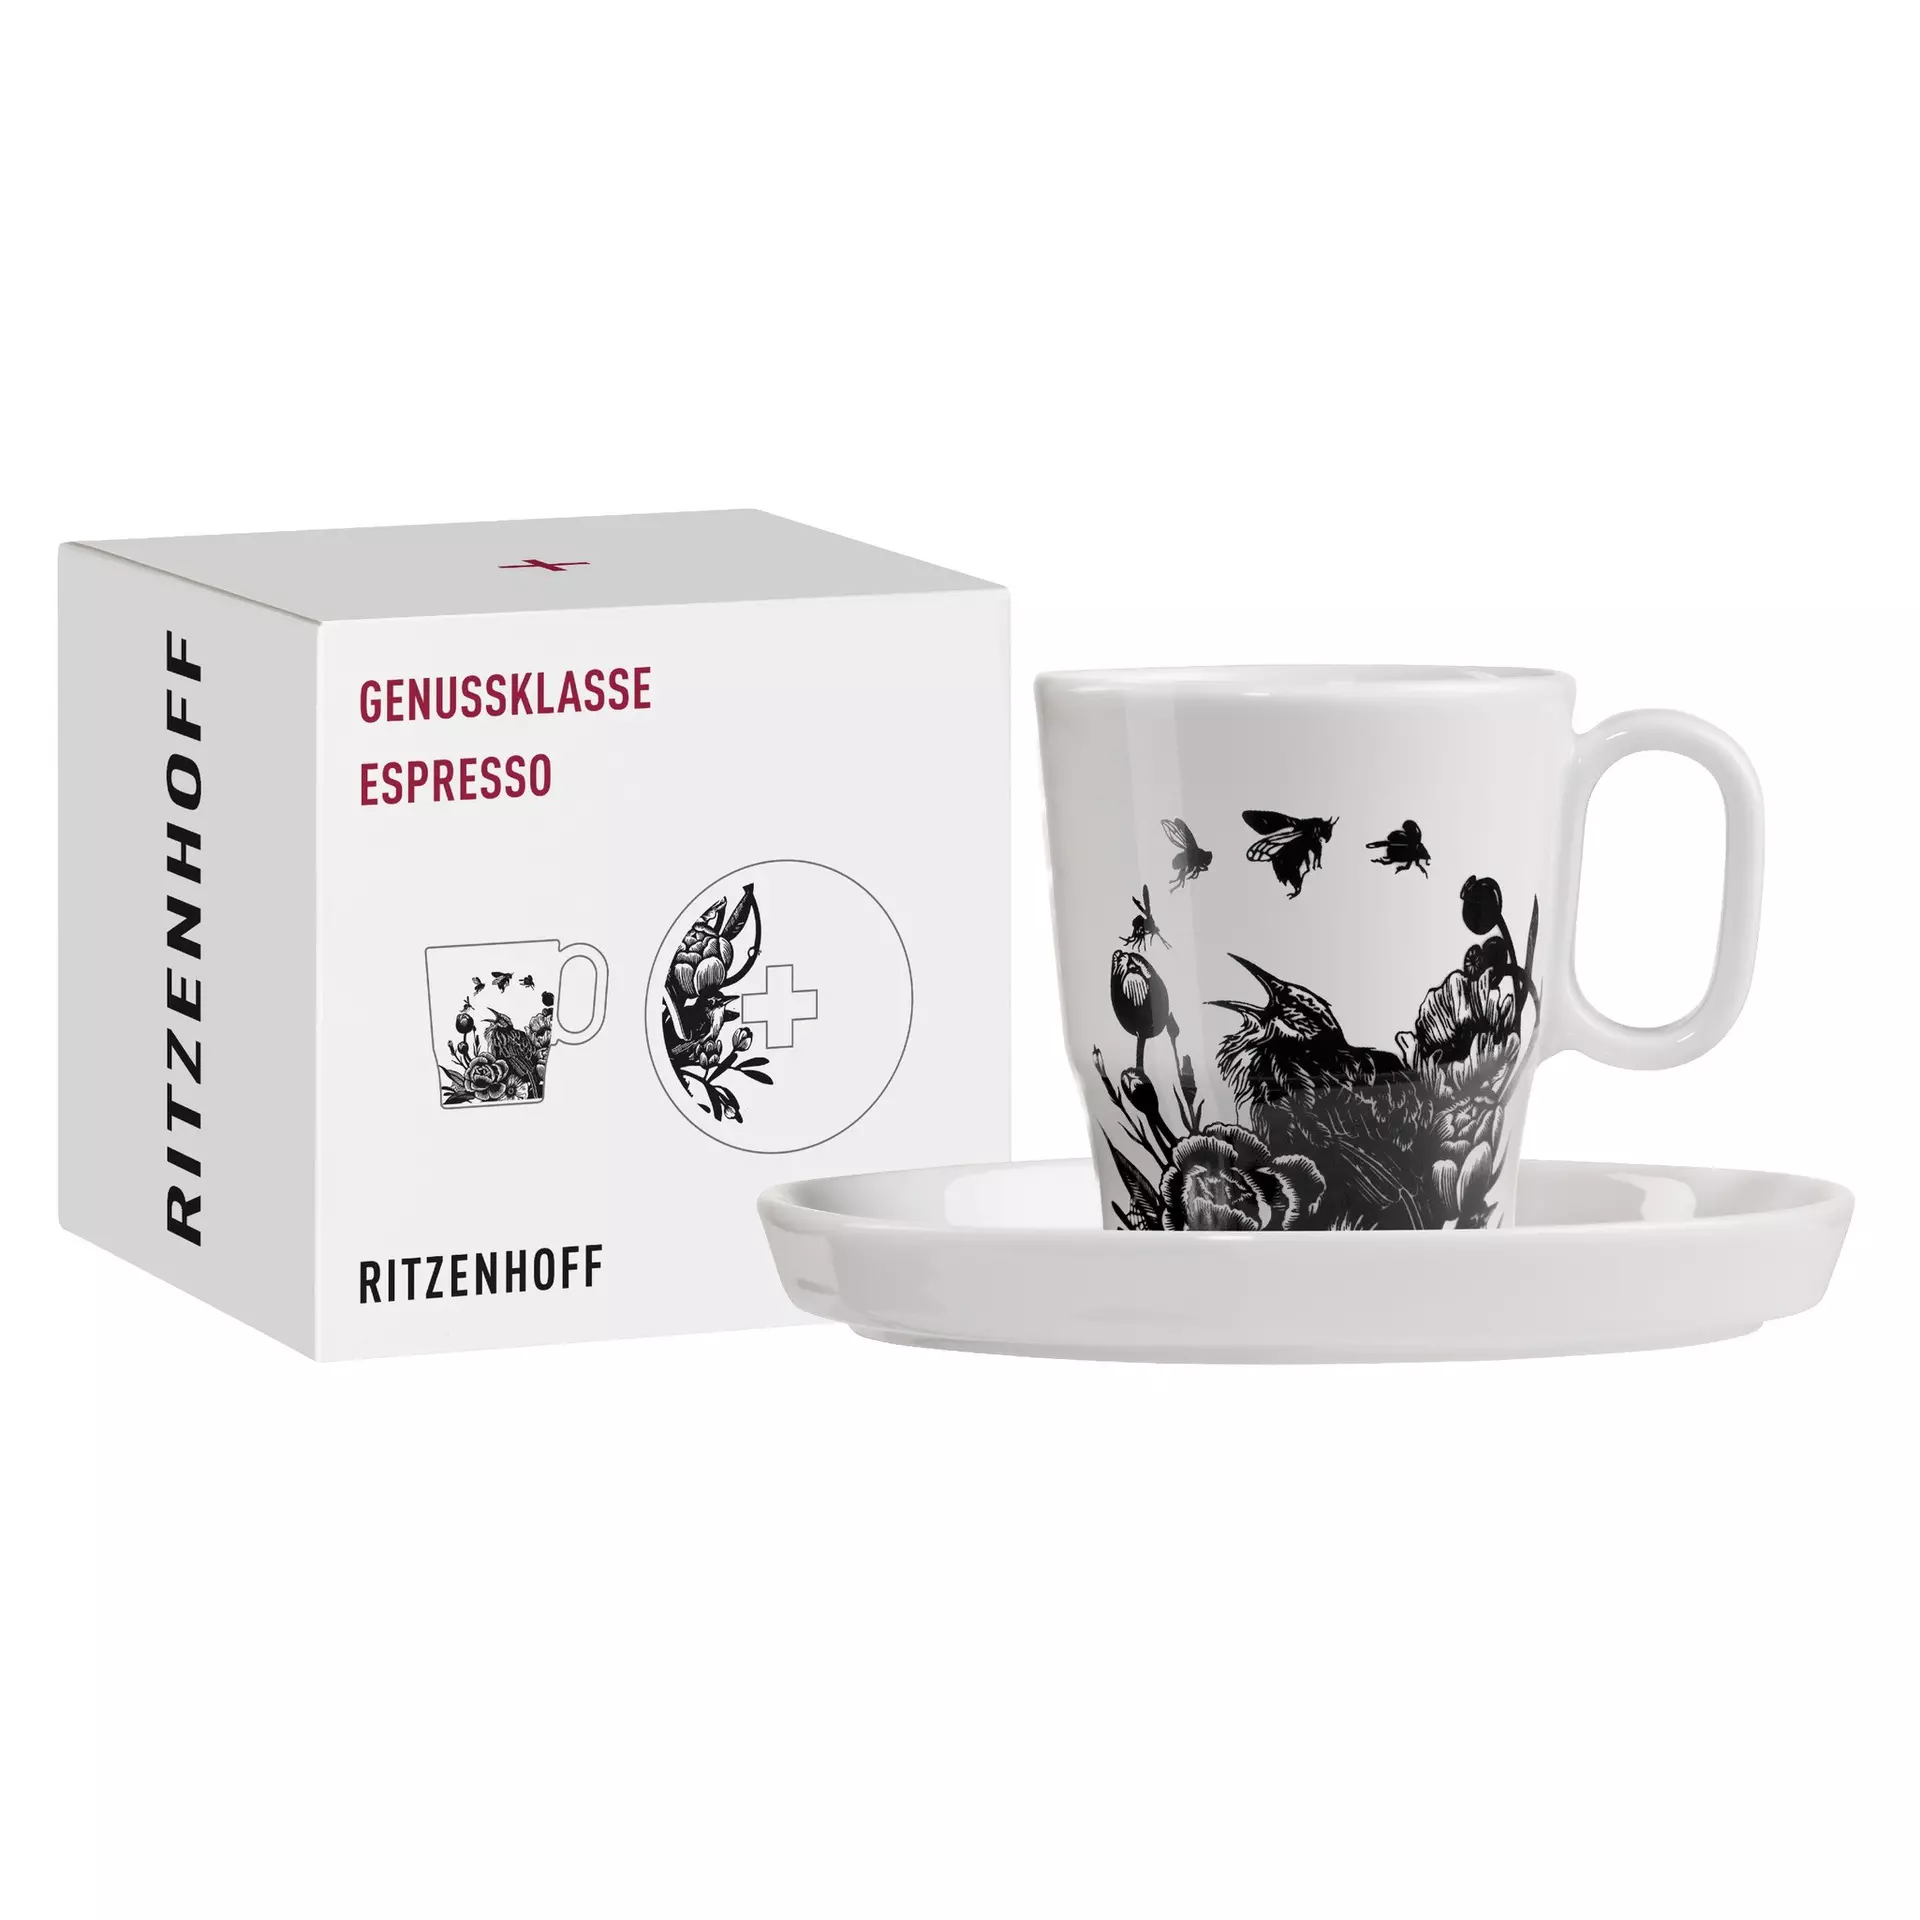 Espressotasse Genussklasse Espresso 001 Ritzenhoff Keramik 6 x 